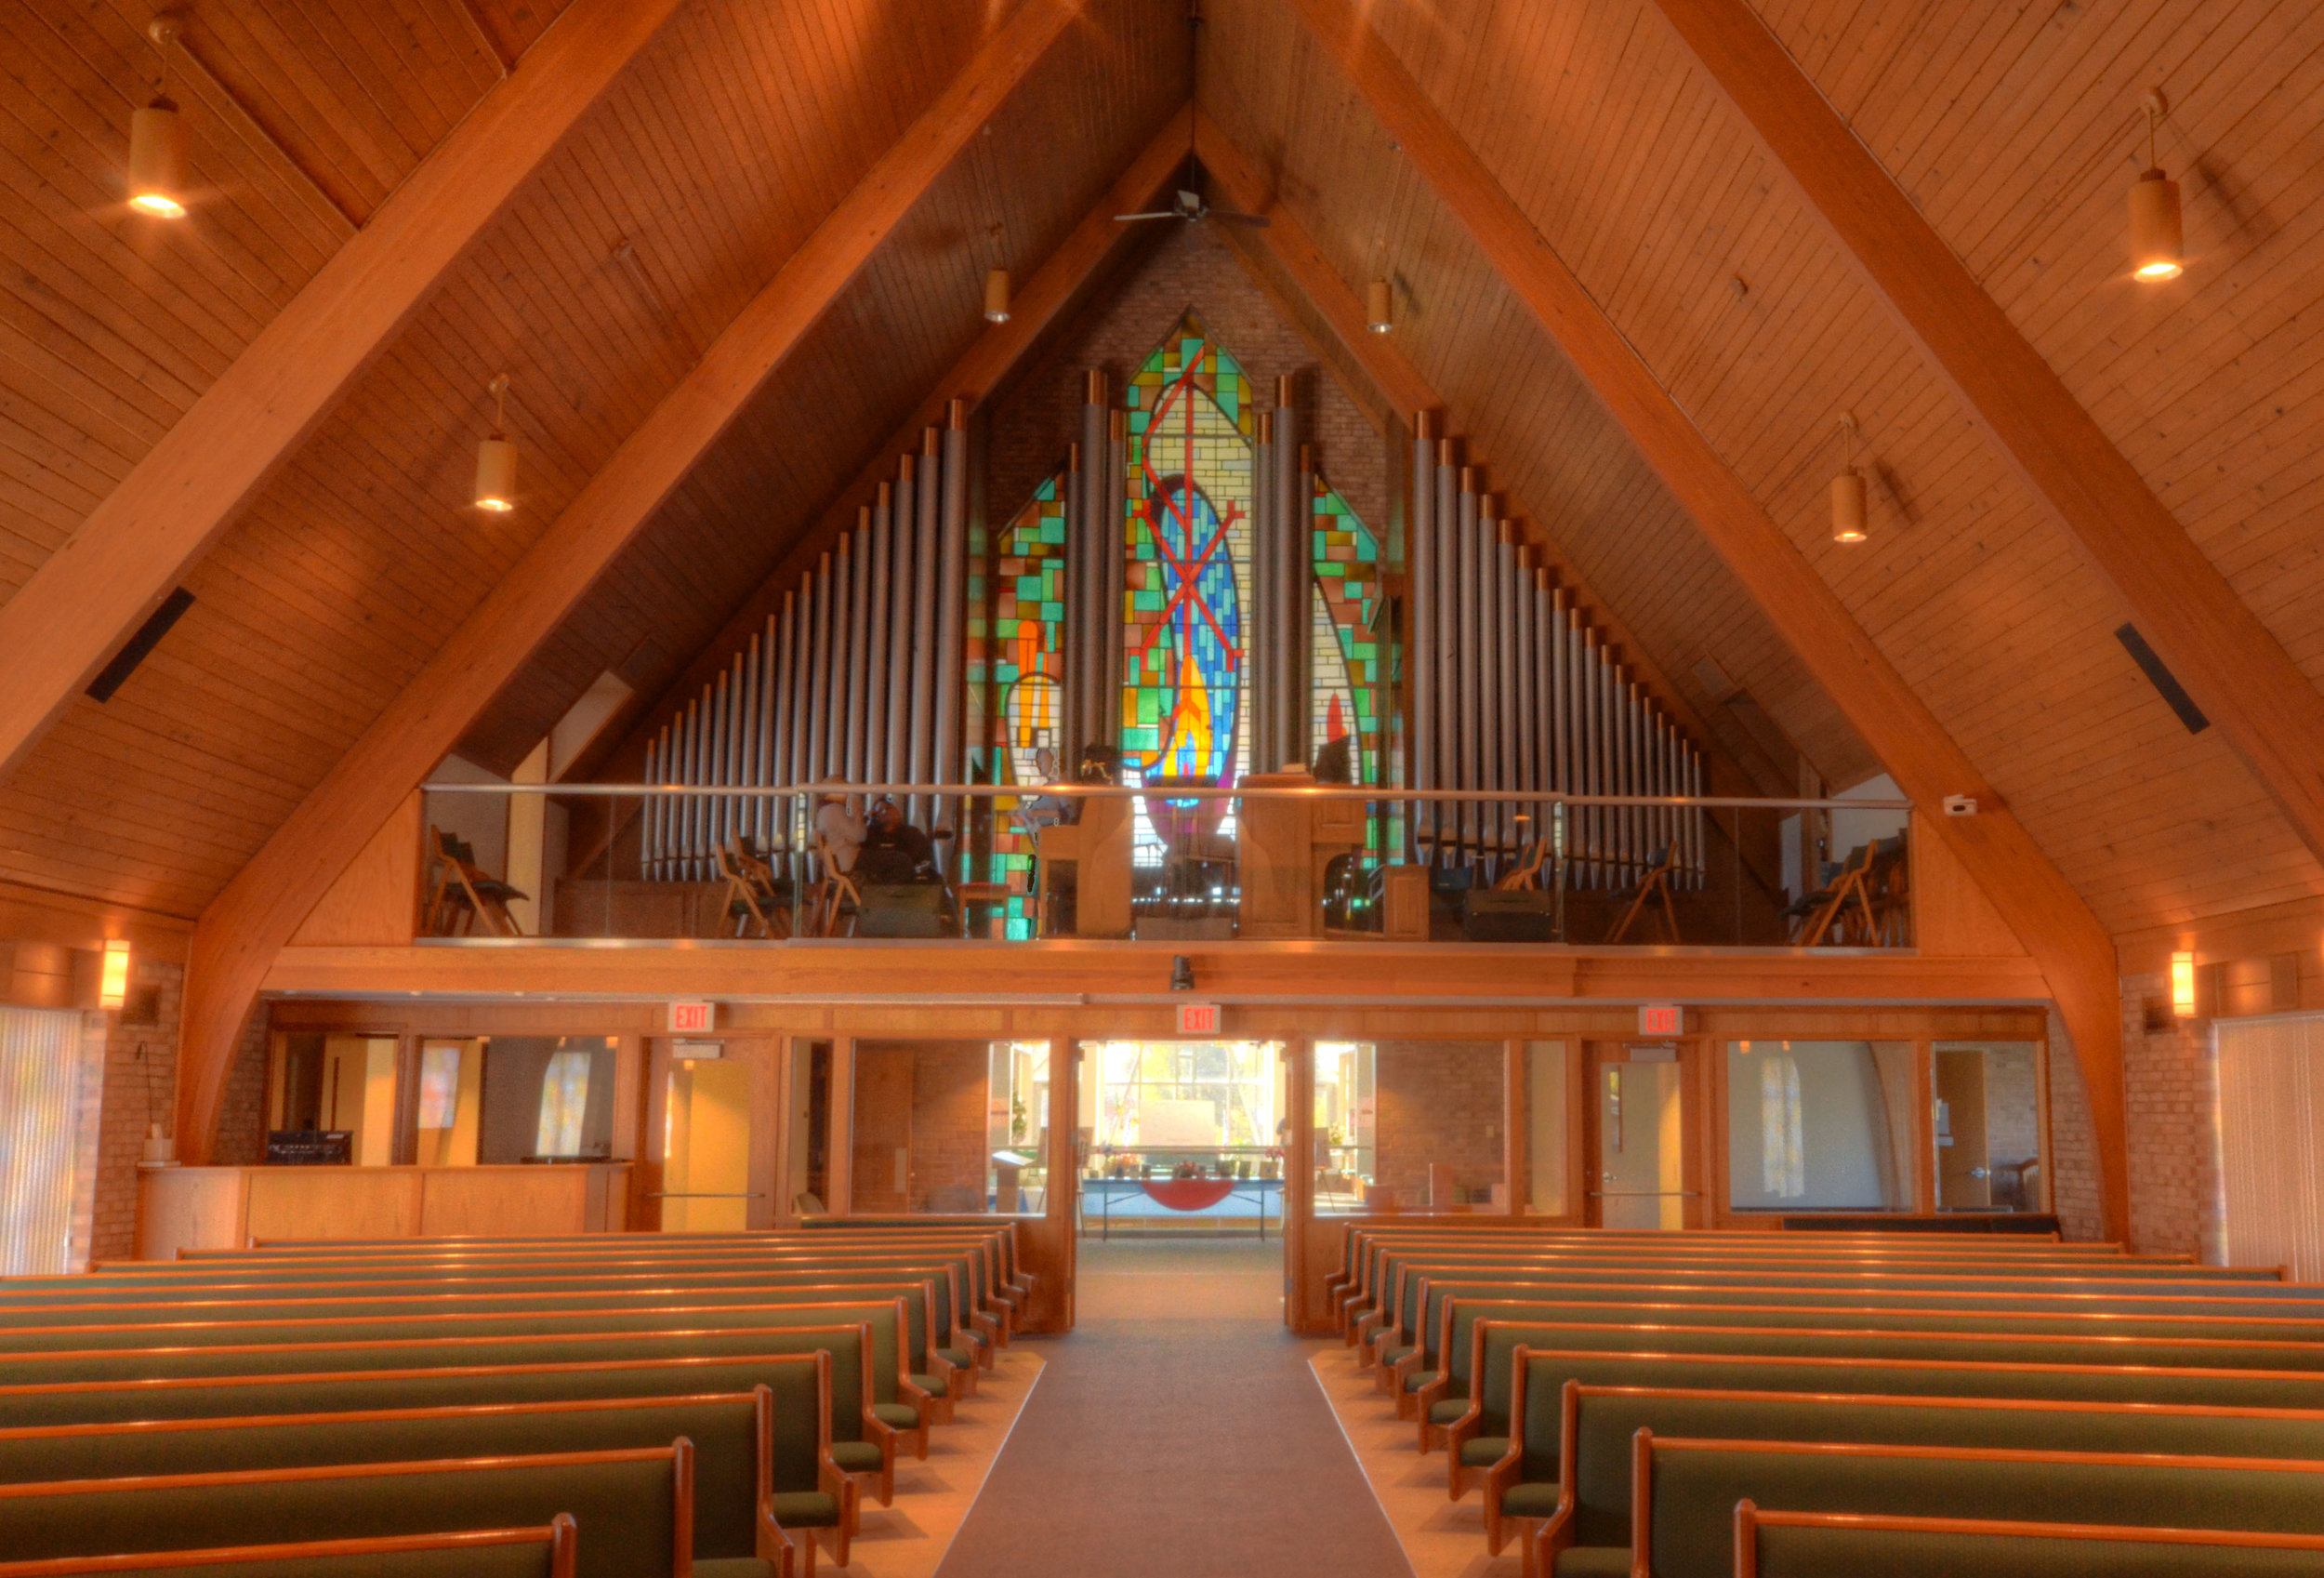 Zion Lutheran Church Interior (Copy)